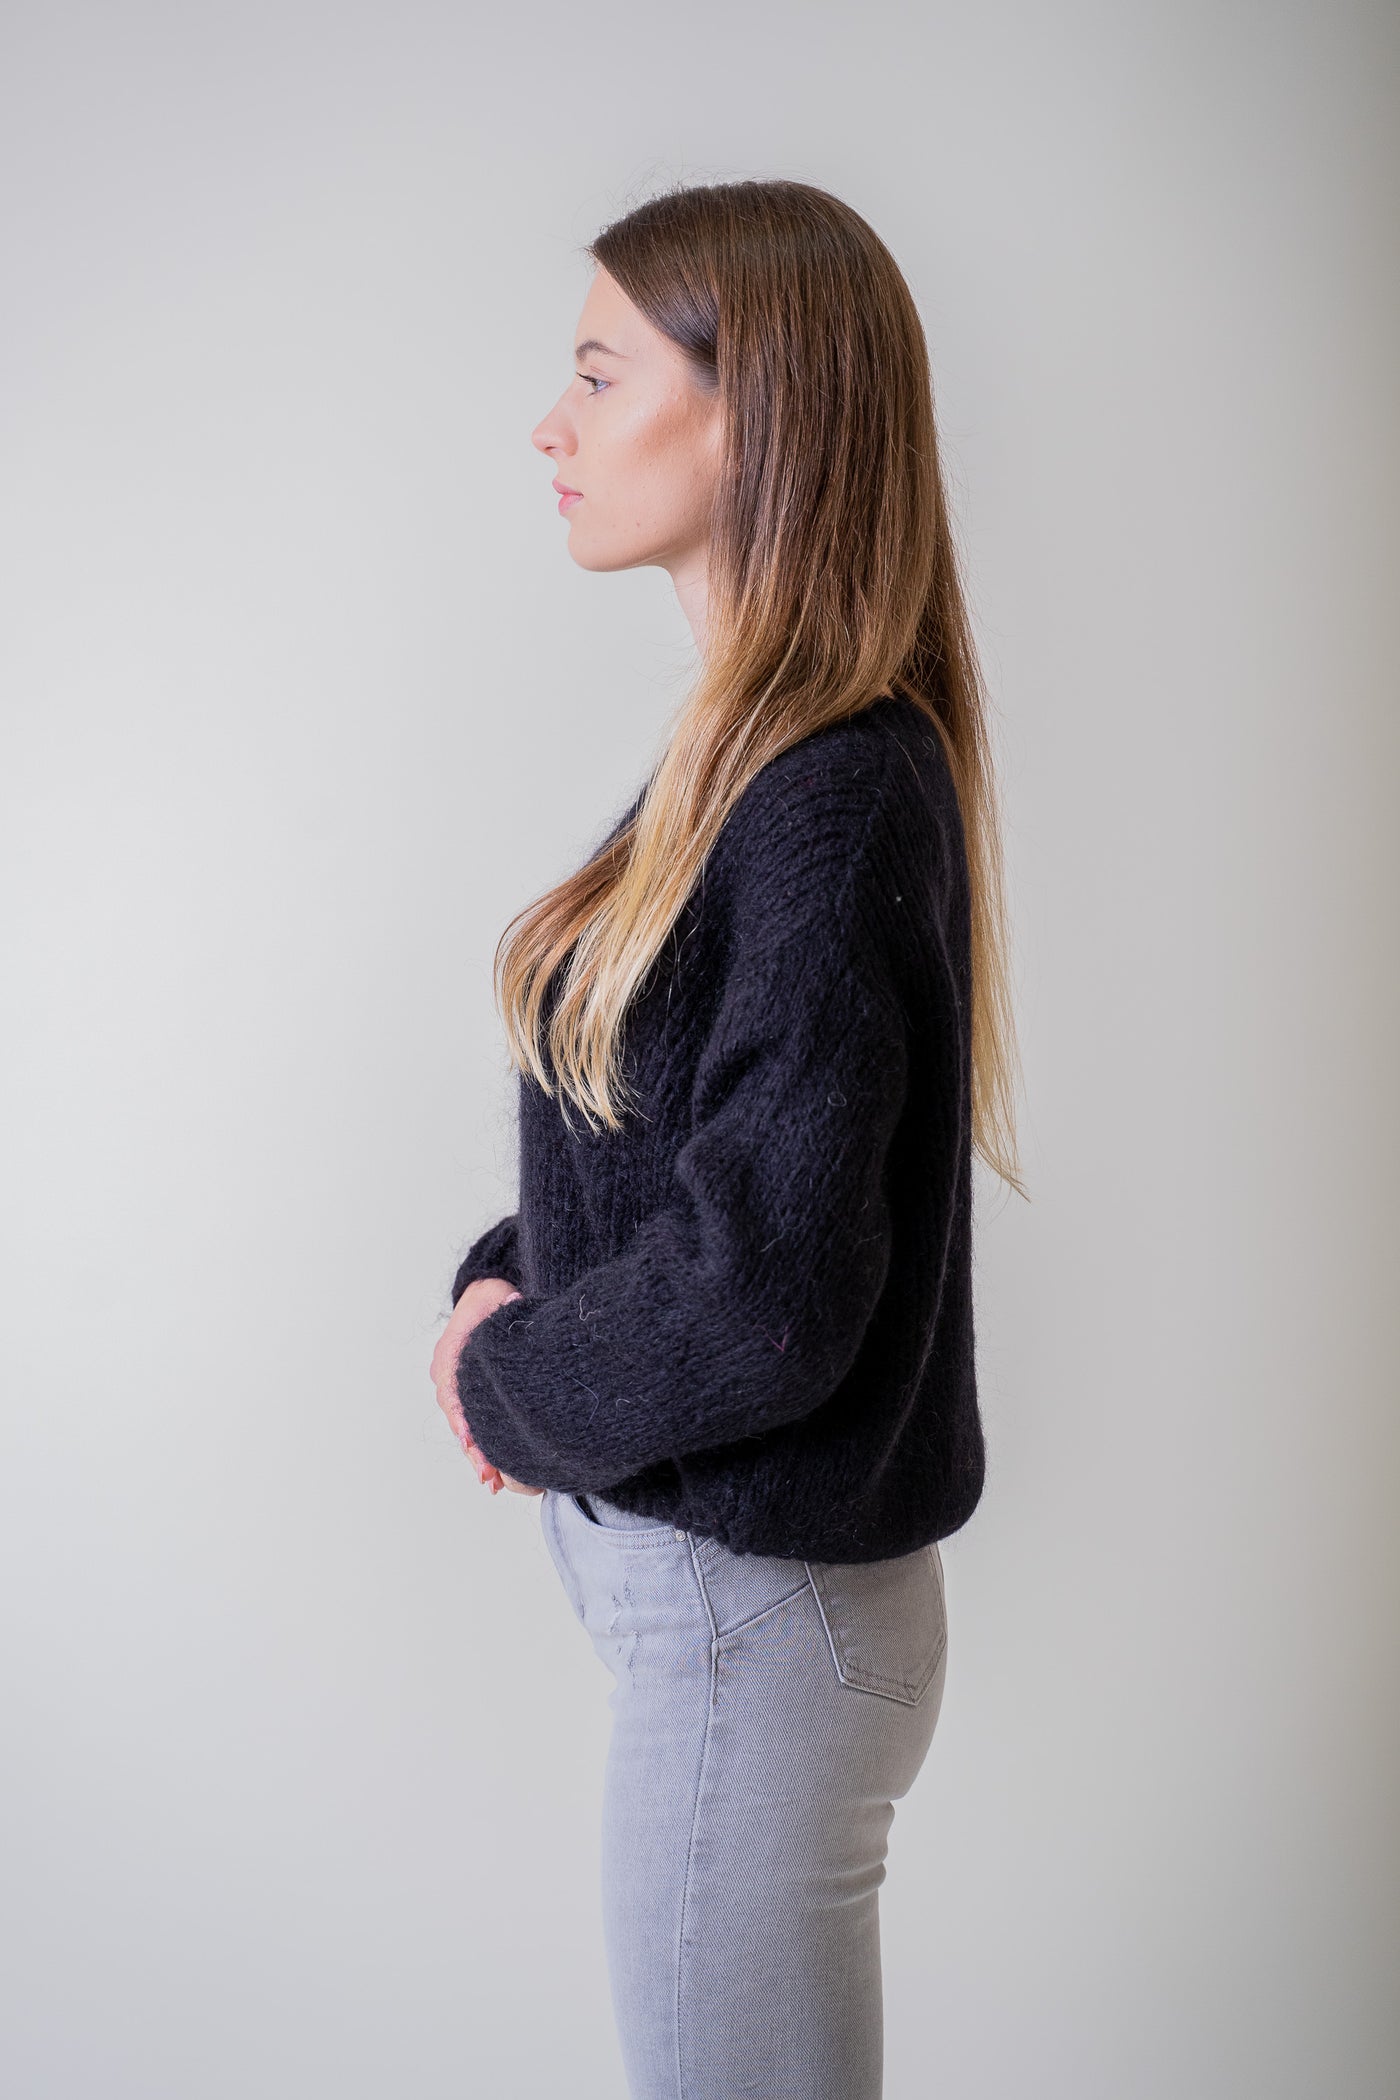 Jednoduchý čierny pletený sveter - UNI - Top